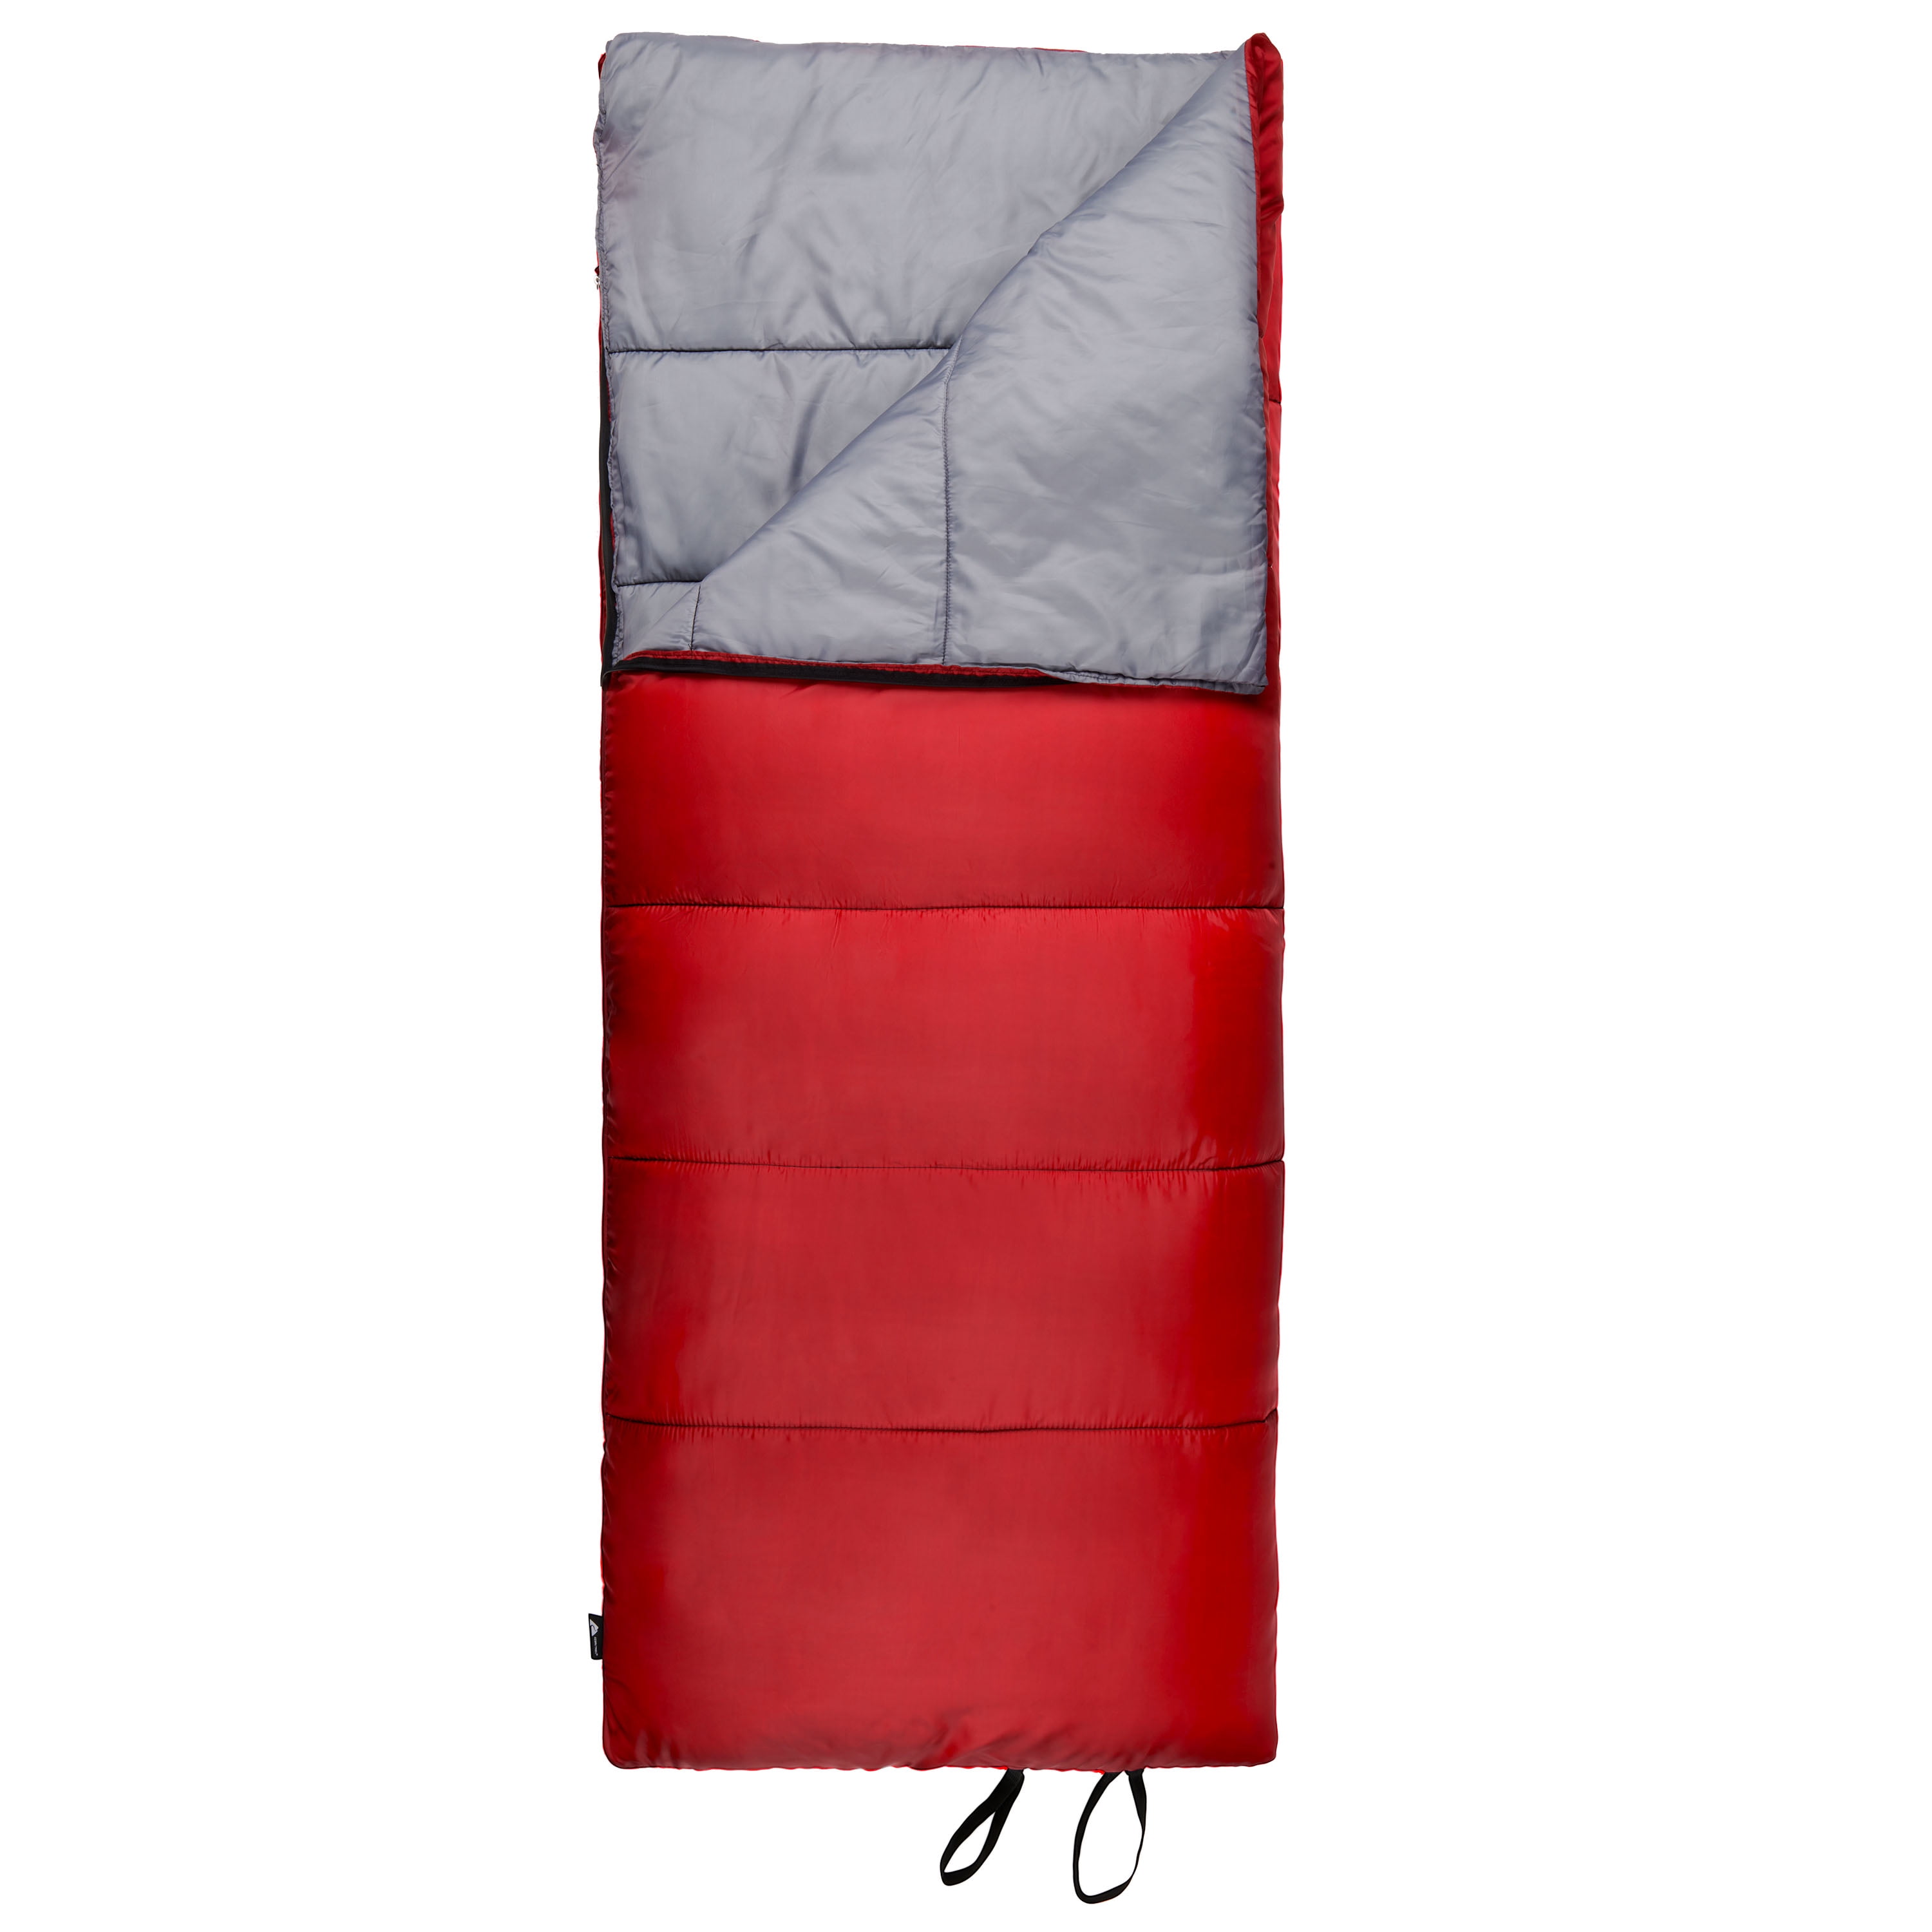 Ozark Trail 50F Warm Weather Adult Sleeping Bag (Red) $14.97  + Free S&H w/ Walmart+ or $35+